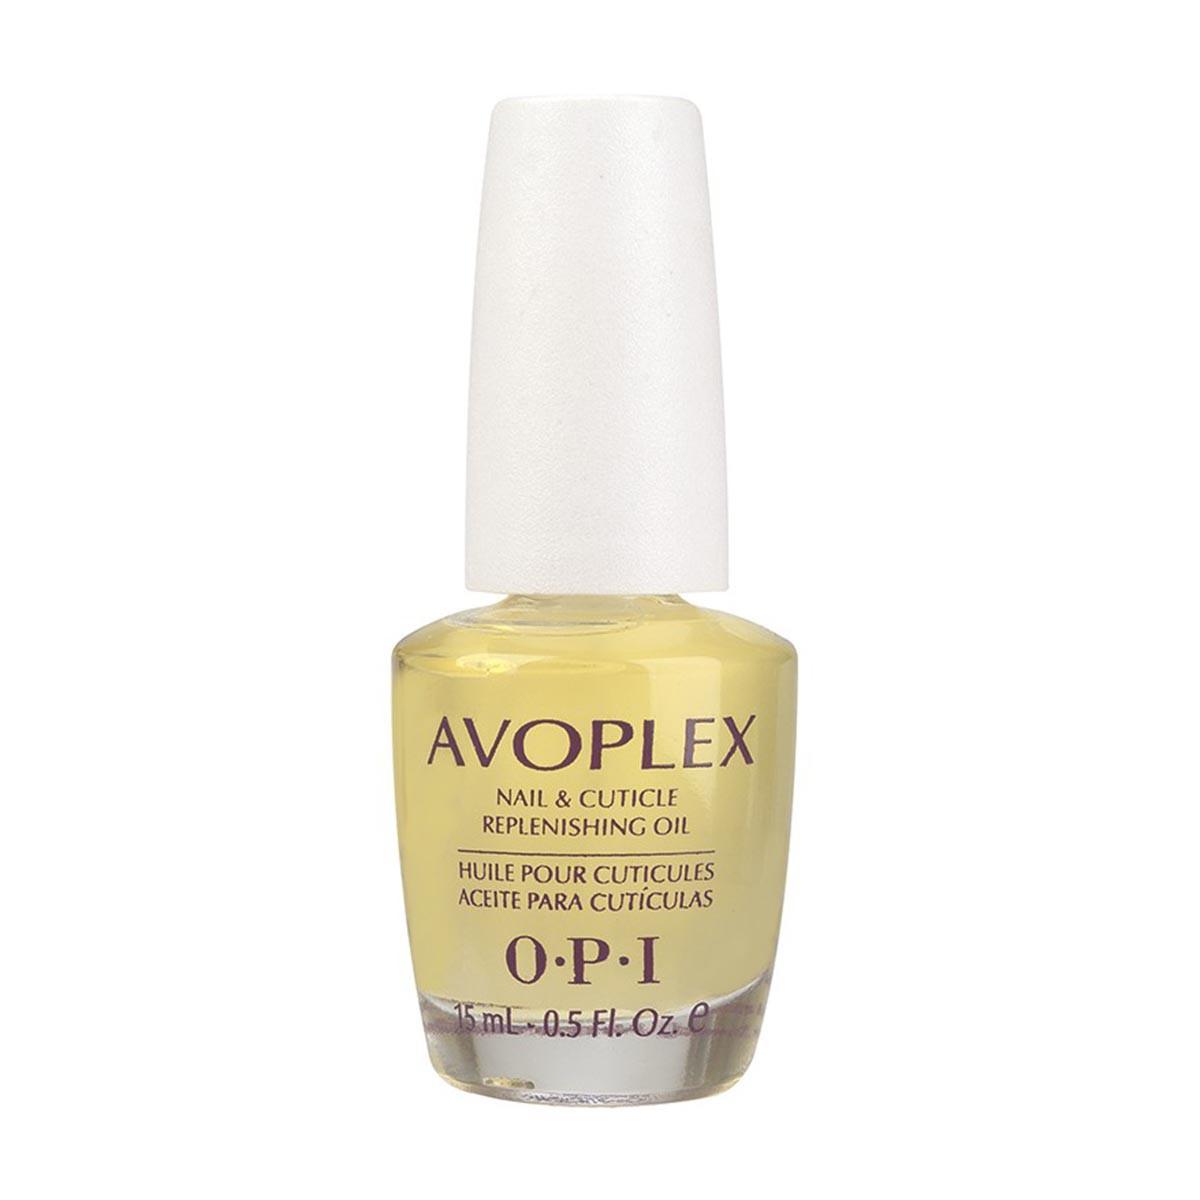 opi-avoplex-nail-cuticle-replenishing-oil-15ml